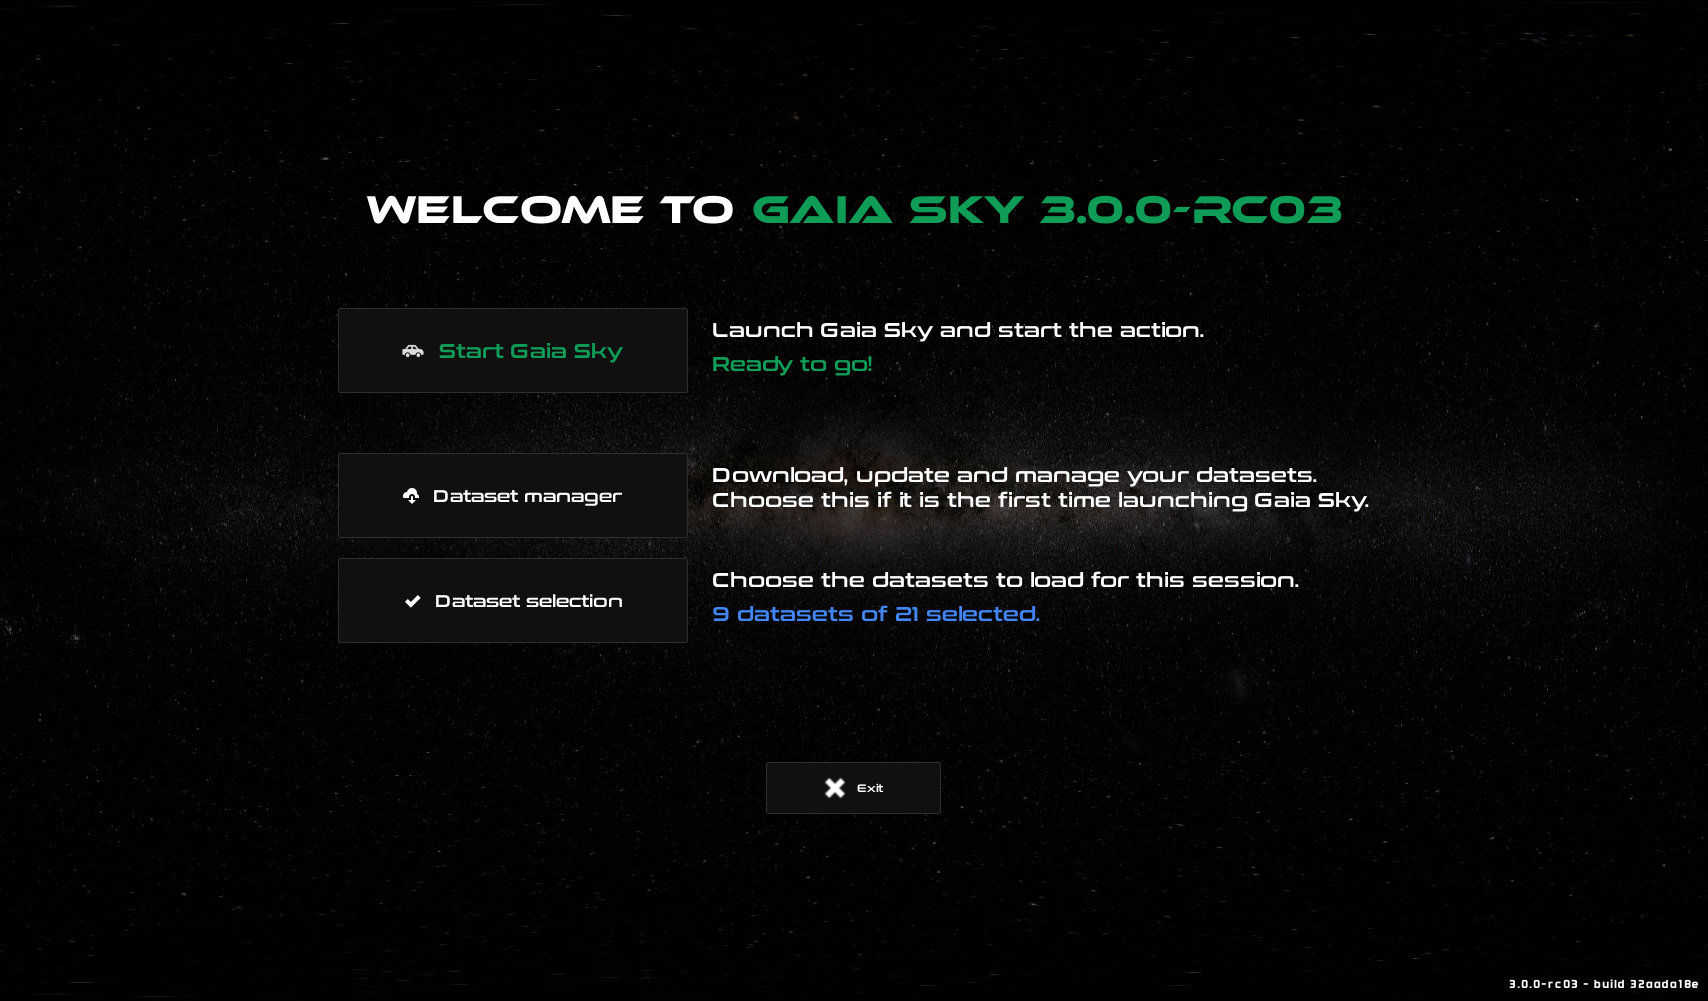 The welcome screen in Gaia Sky 3.0.0+